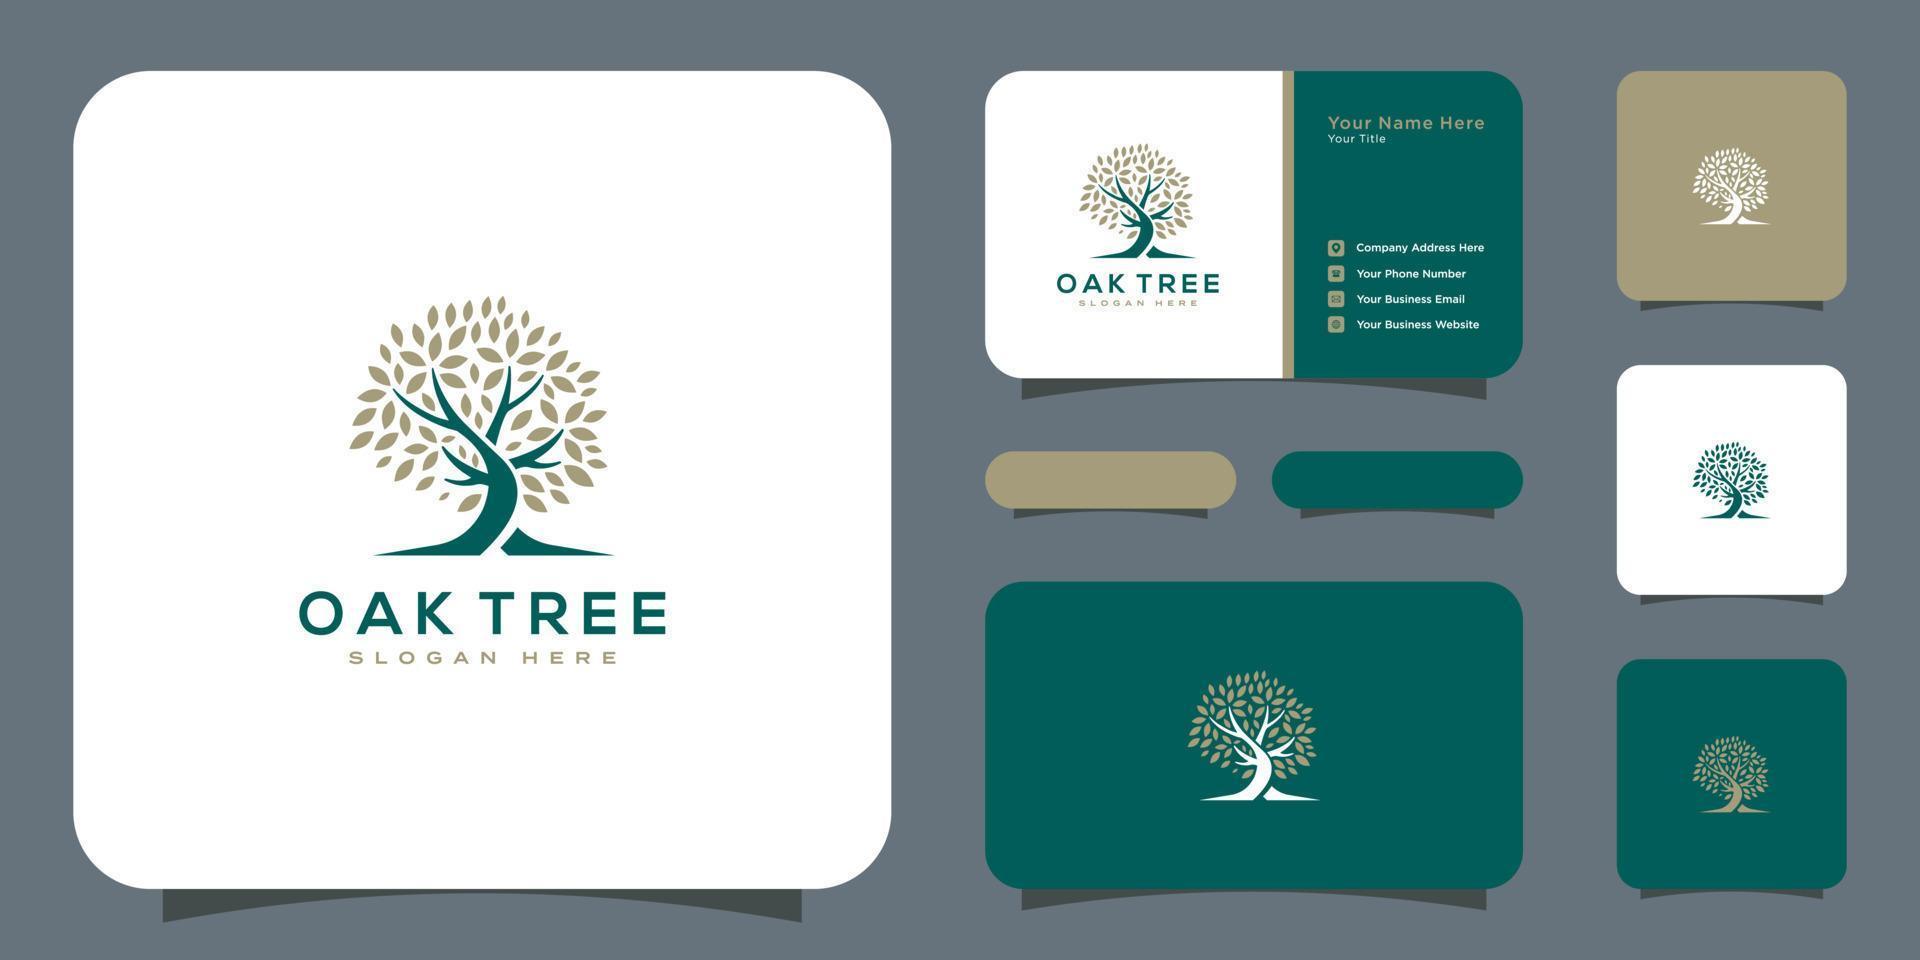 black oak tree logo and roots design vector